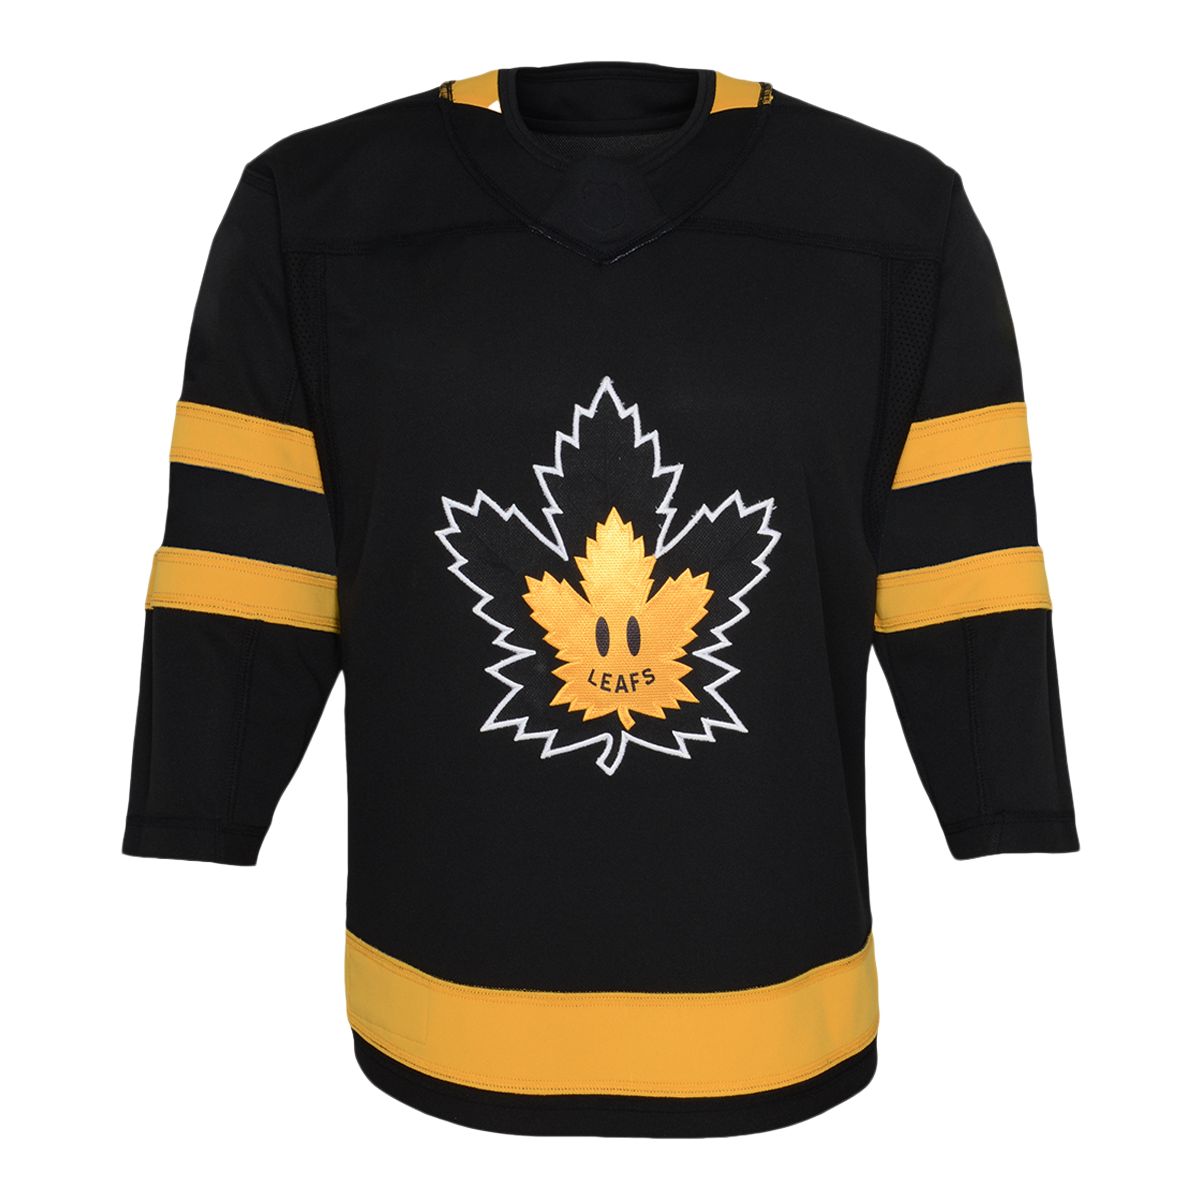 Justin Bieber Designs Alternate Jerseys for the Toronto Maple Leafs